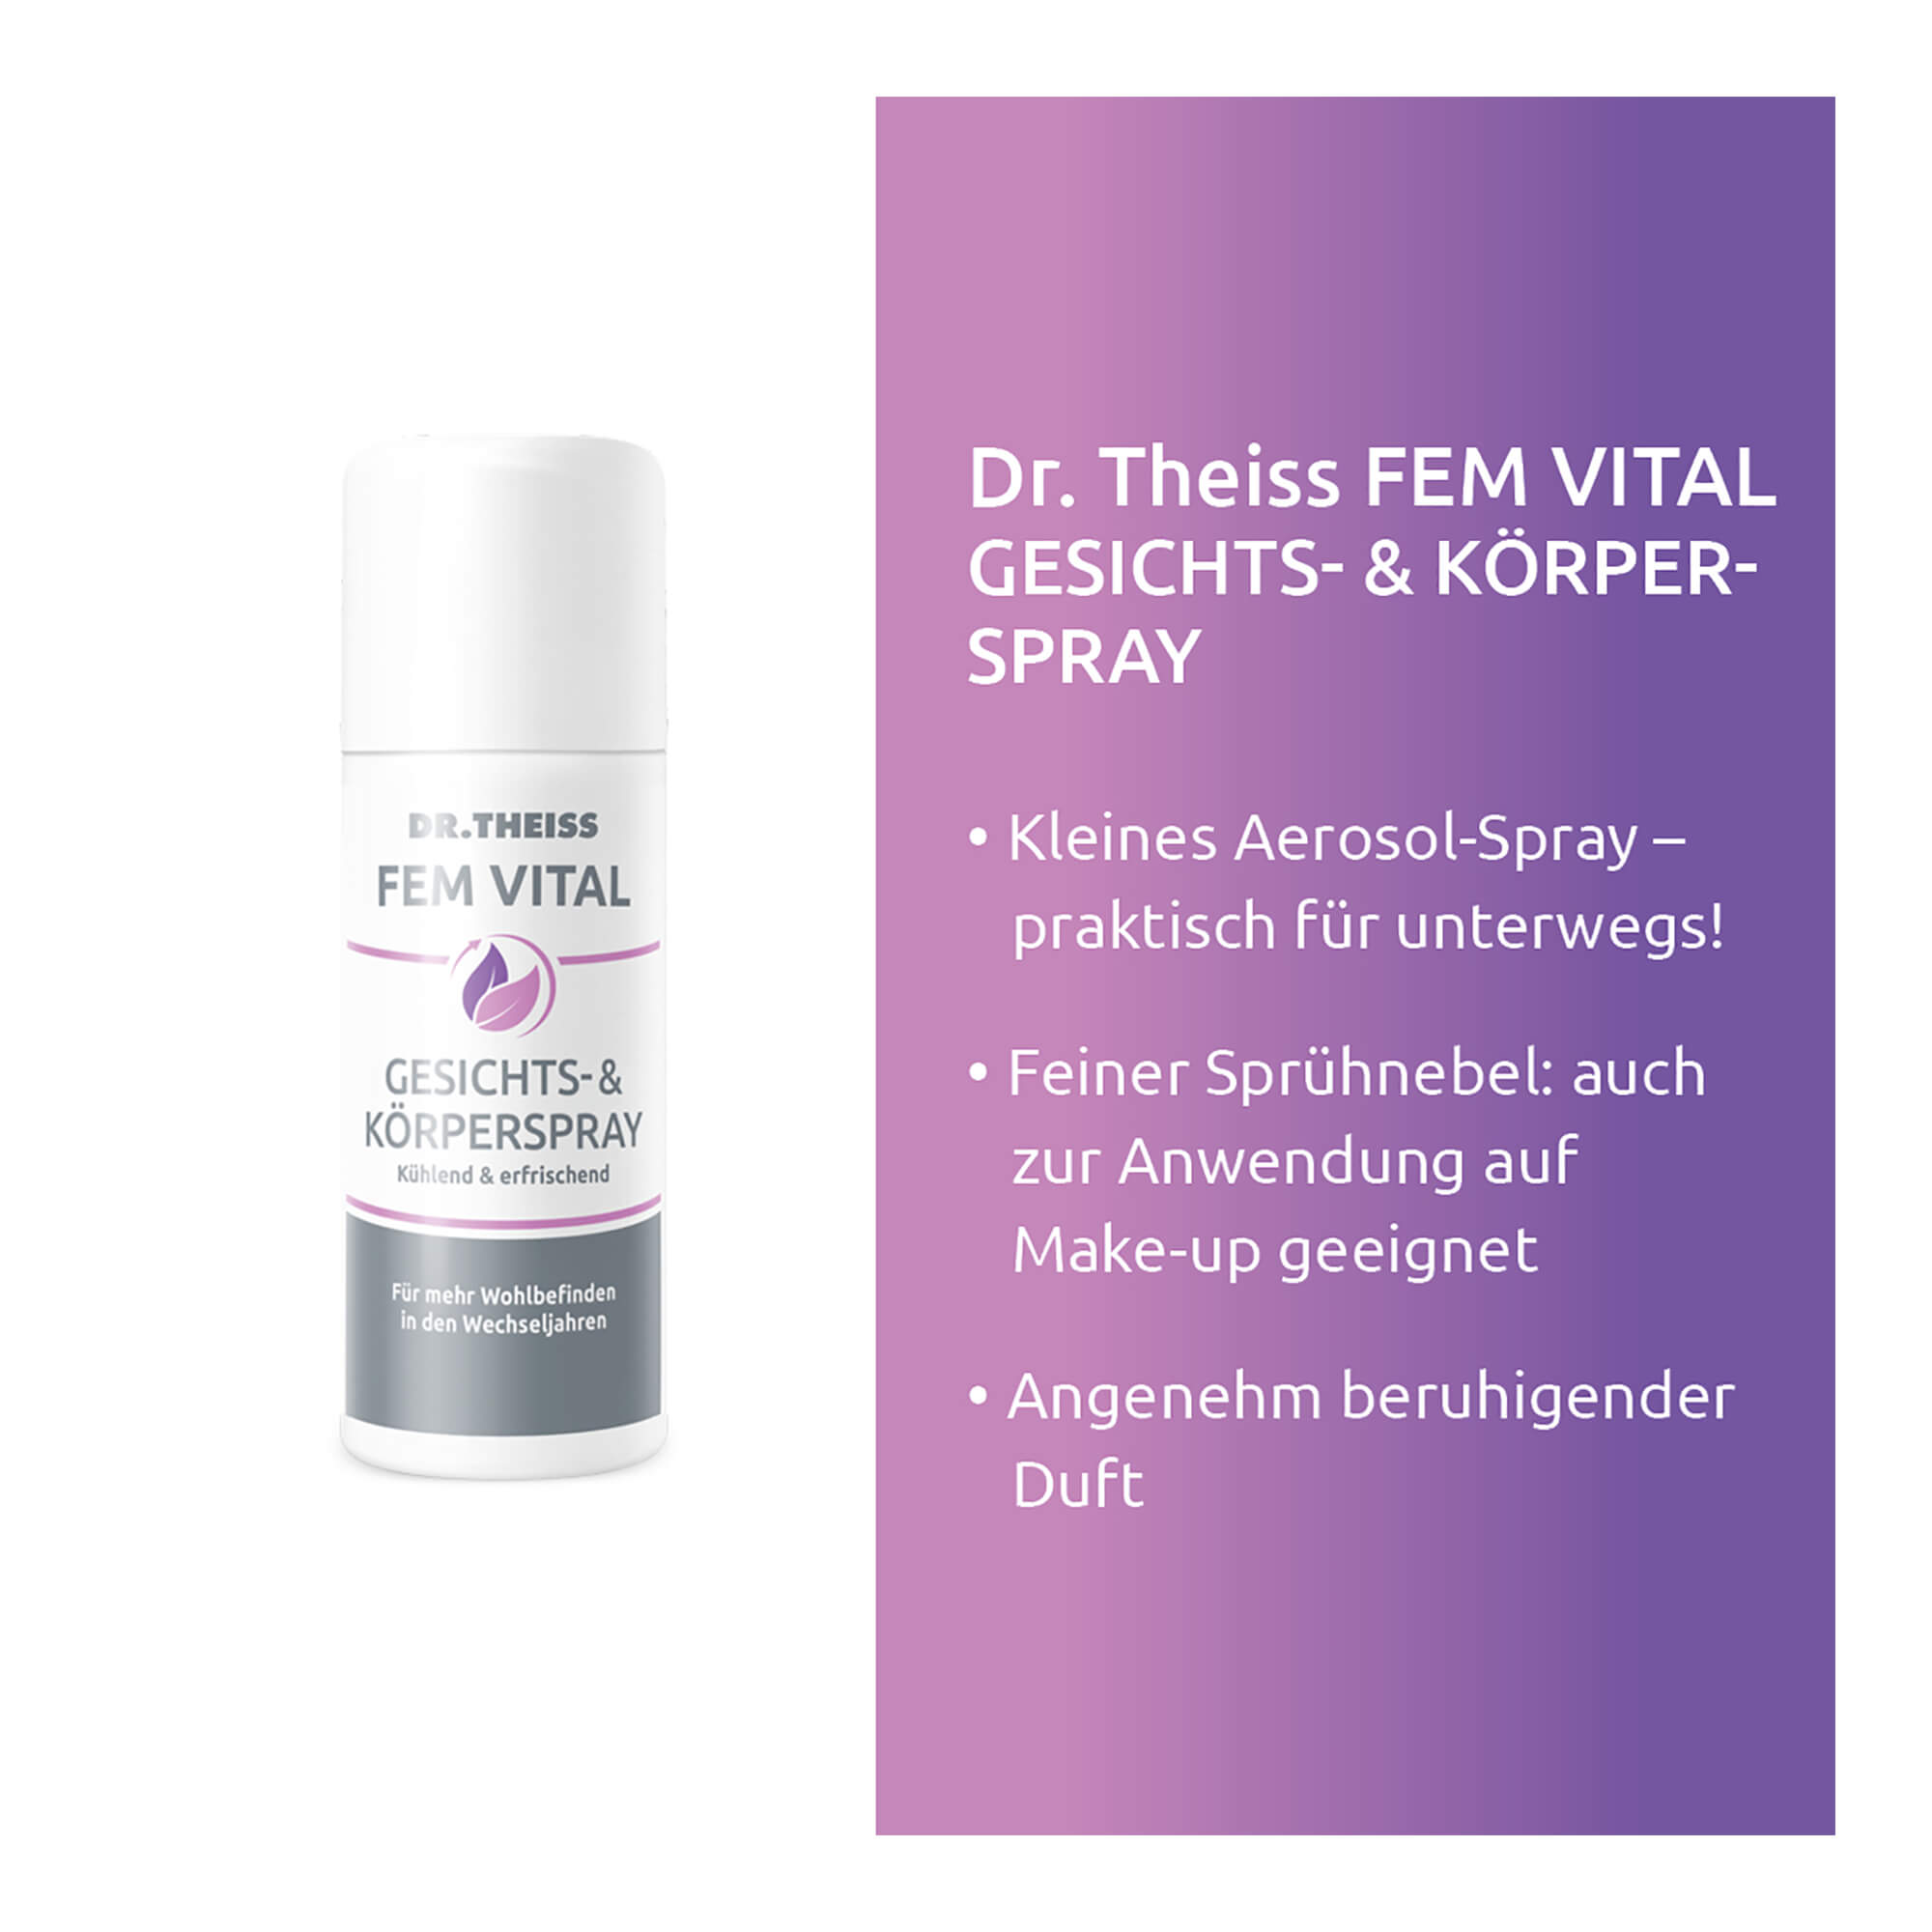 Dr. Theiss FEM VITAL Gesichts- & Körperspray Merkmale